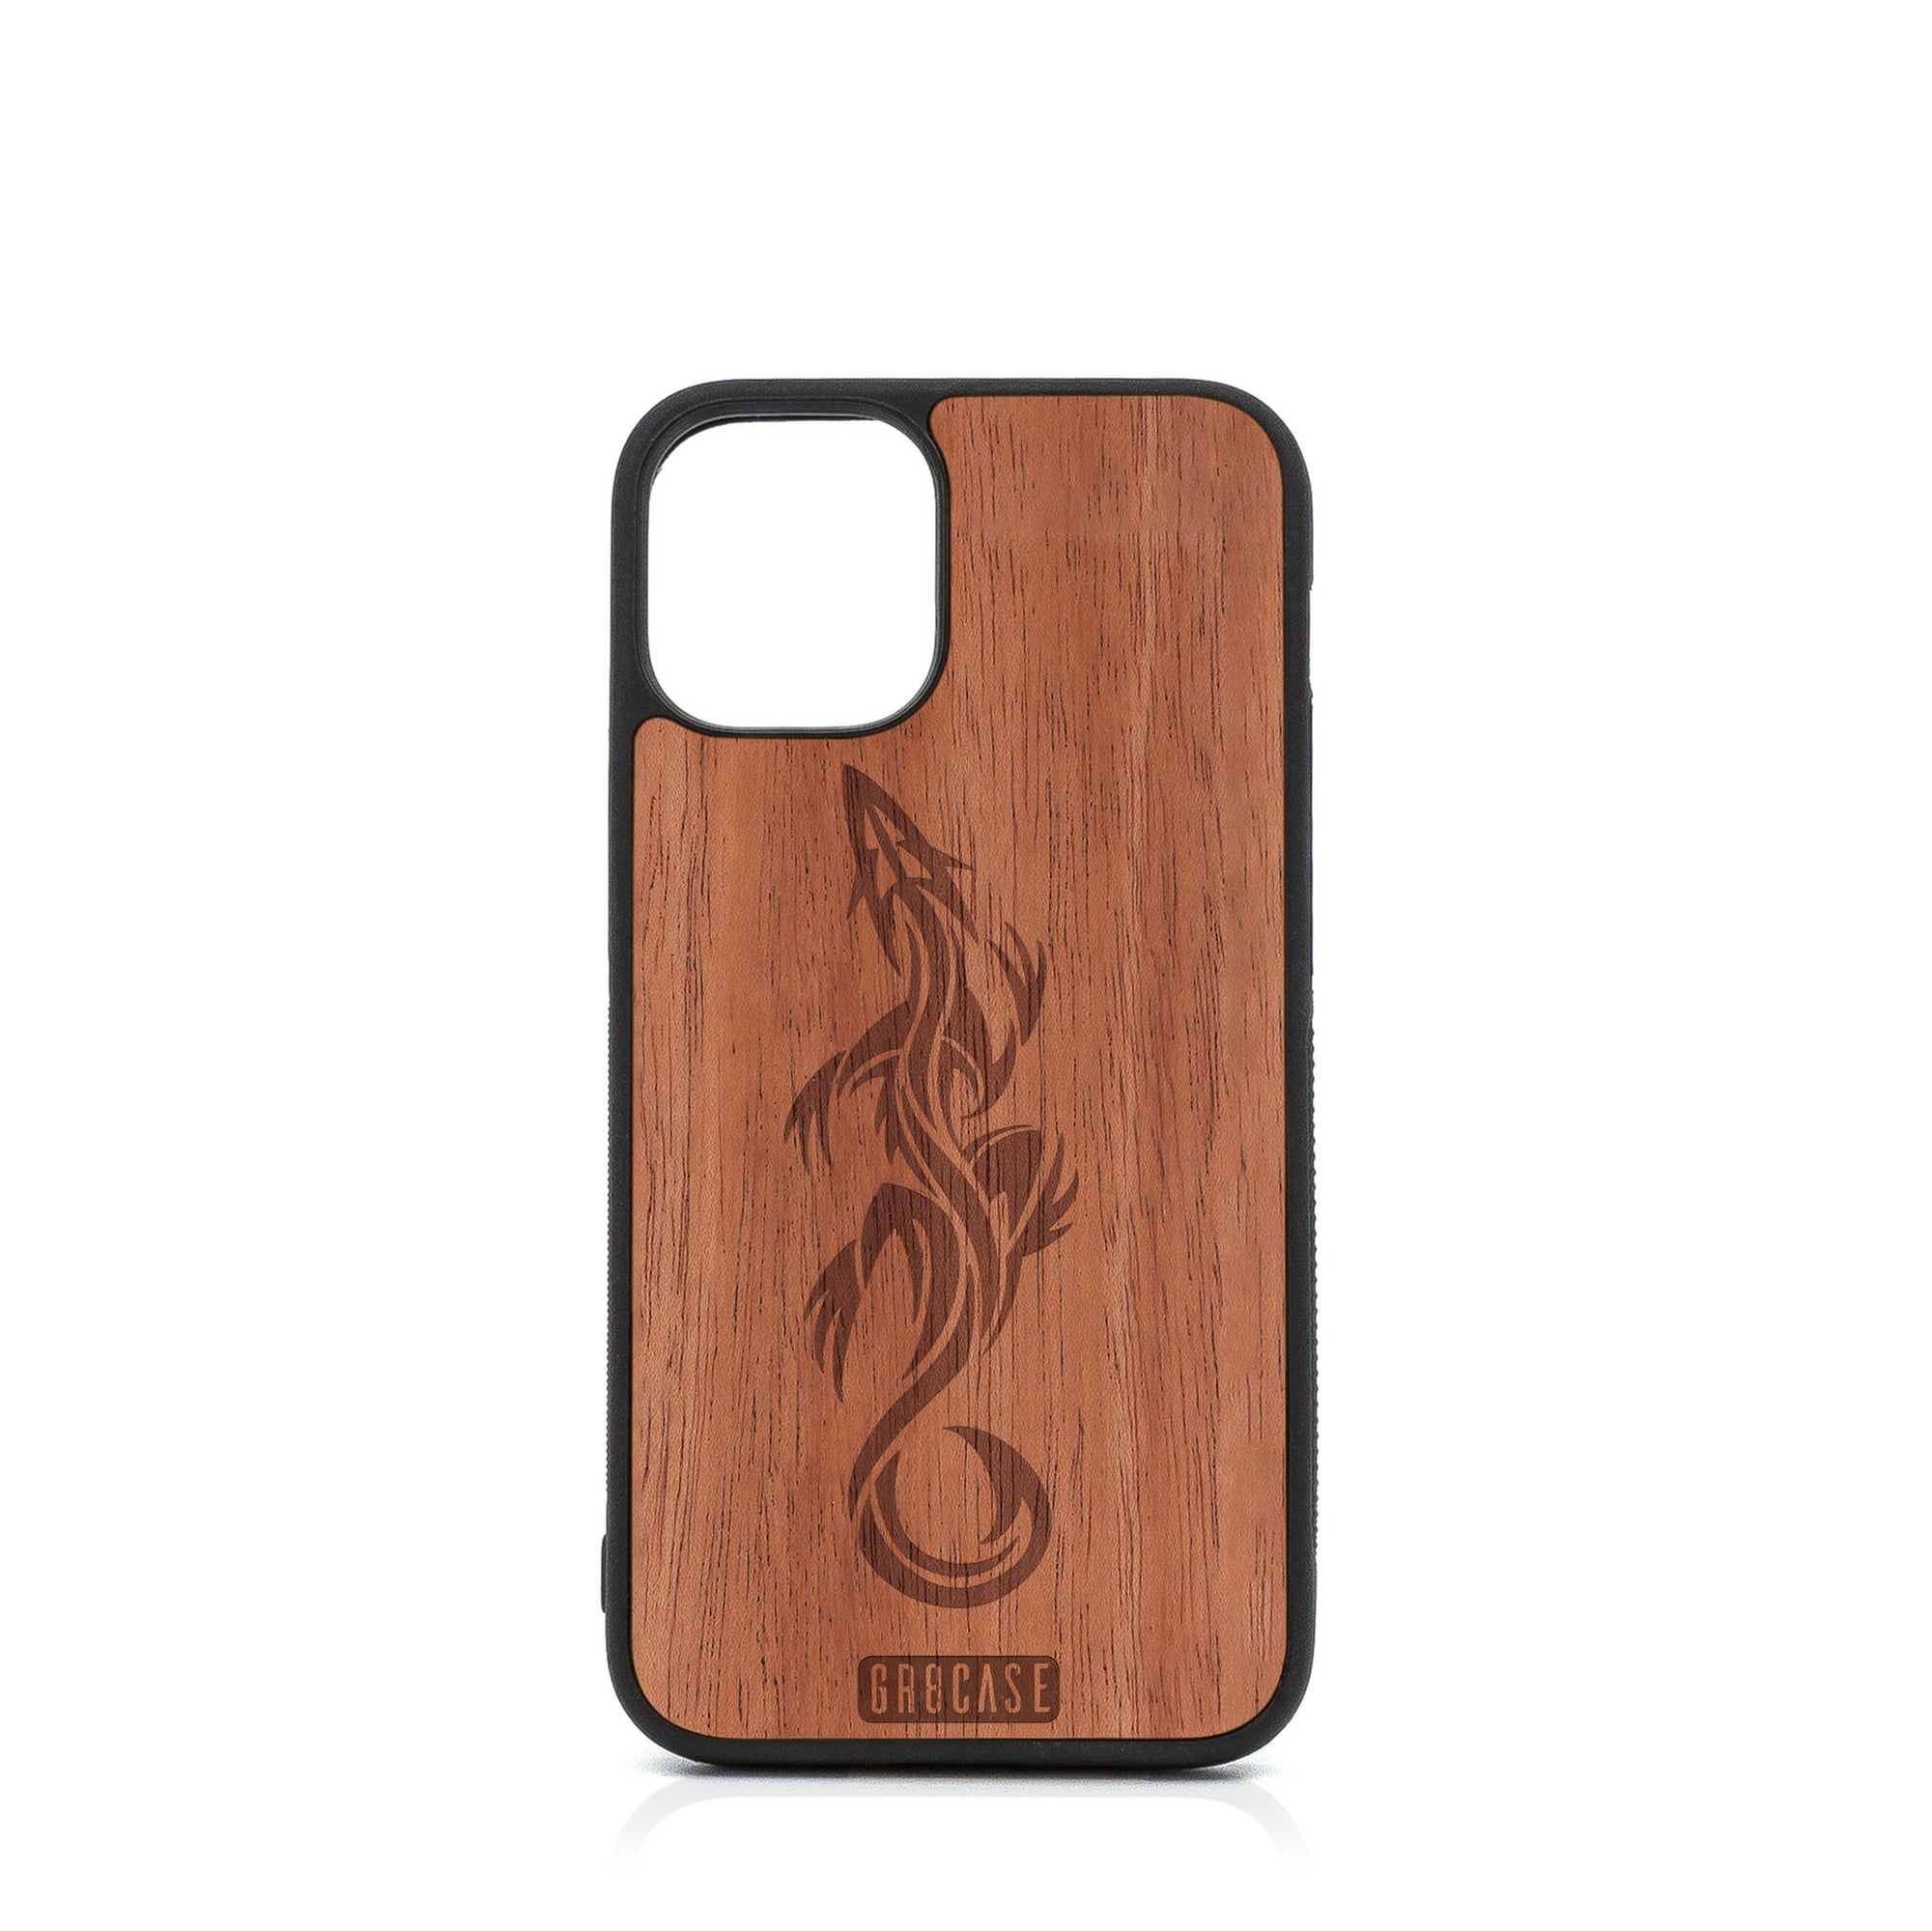 Lizard Design Wood Case For iPhone 12 Mini